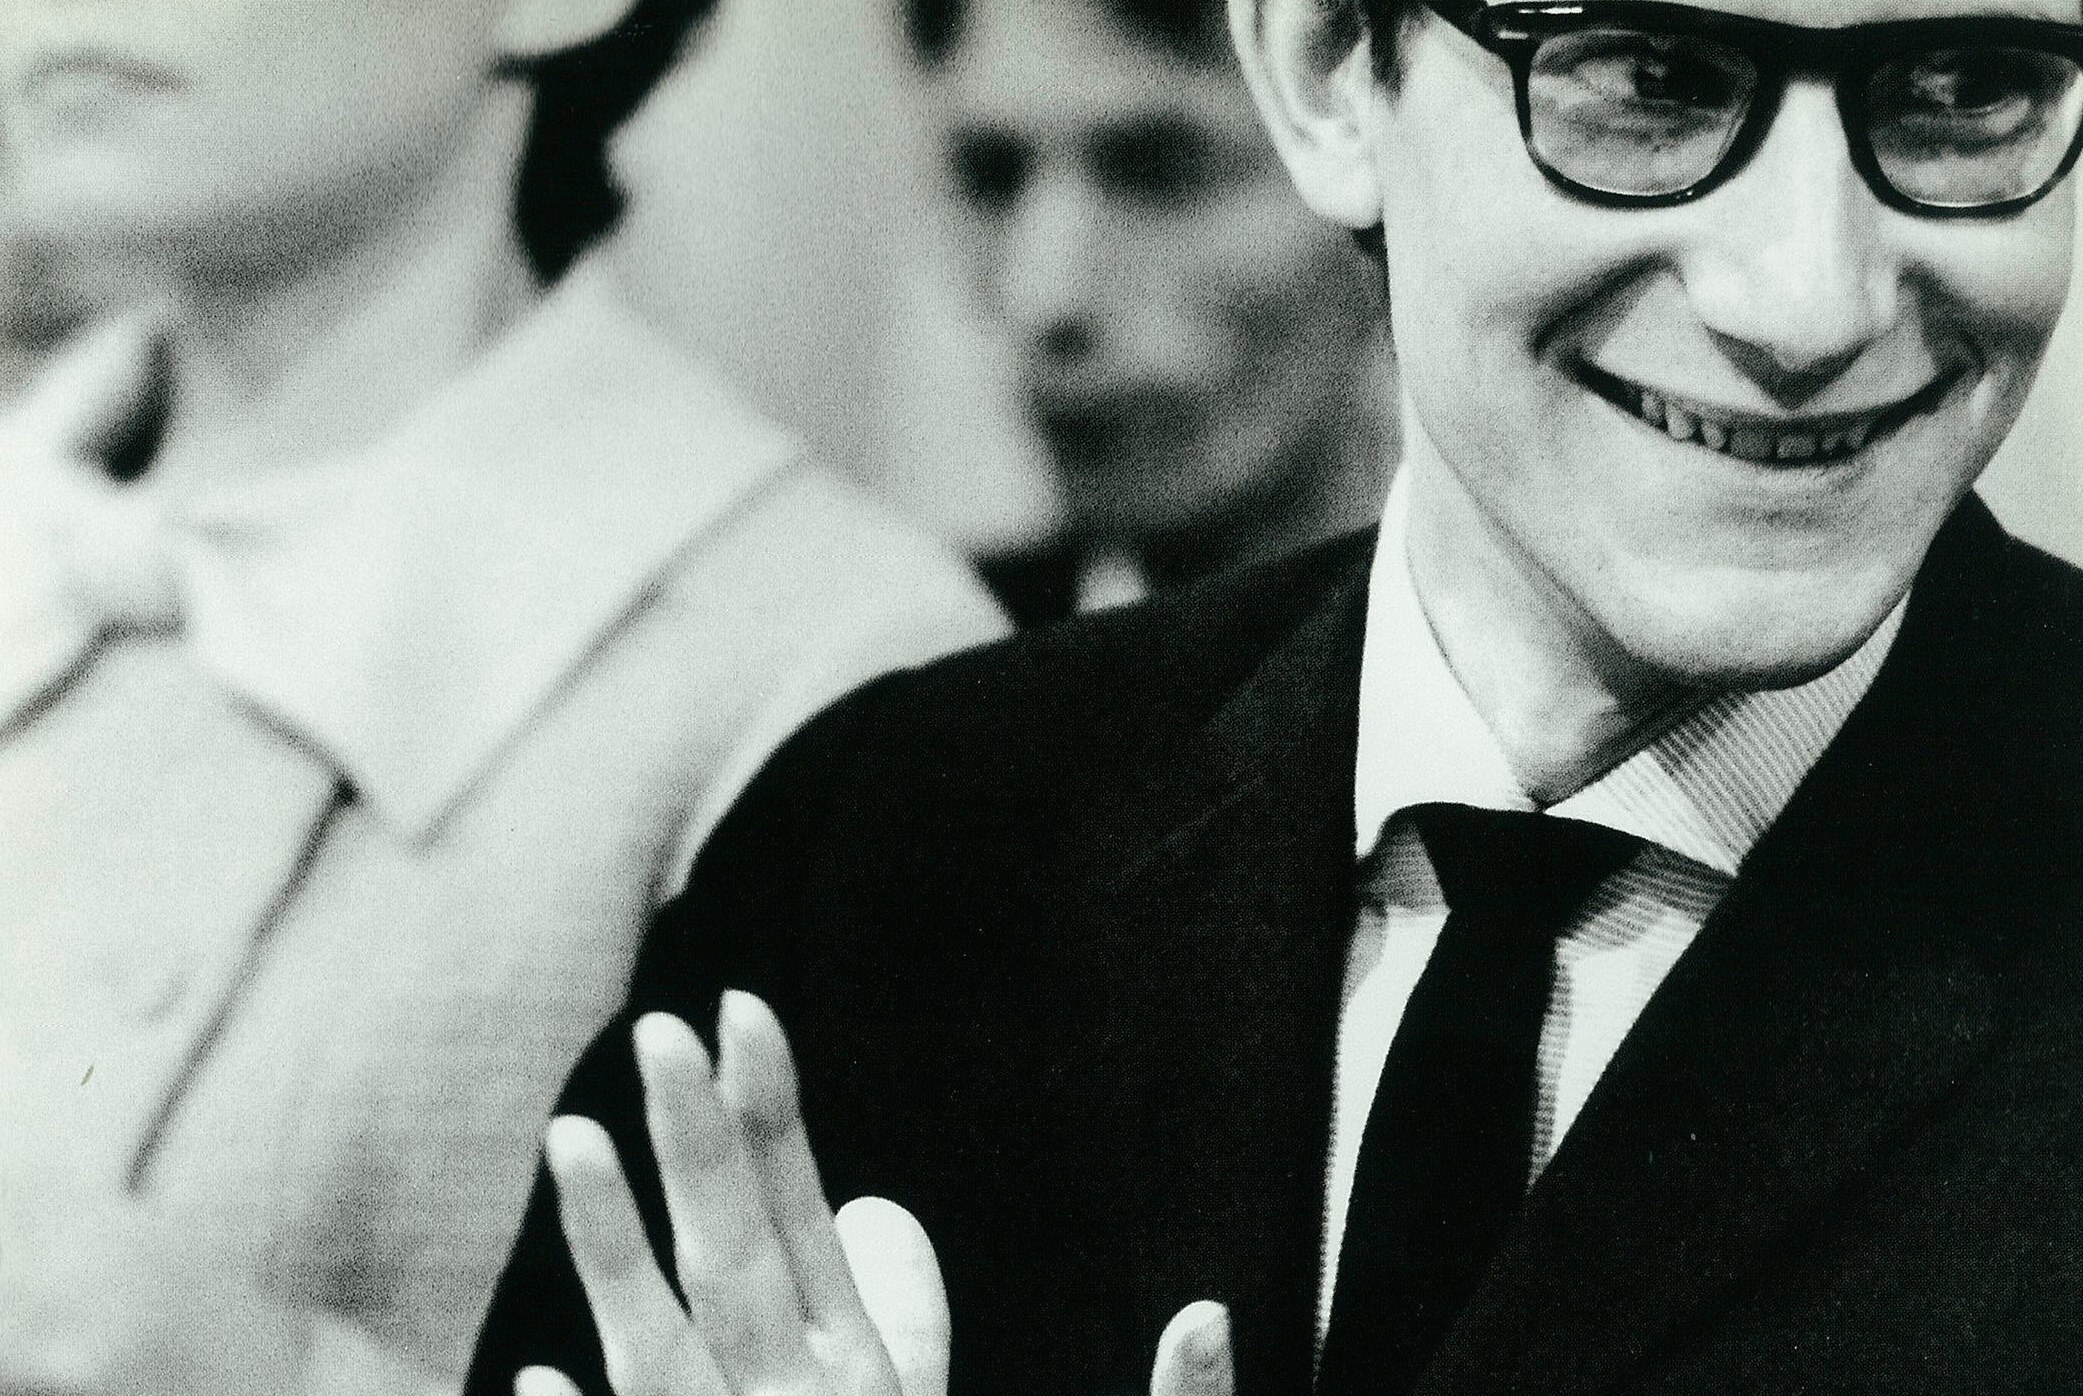 Yves Saint Laurent + Halston: Fashioning the 70s